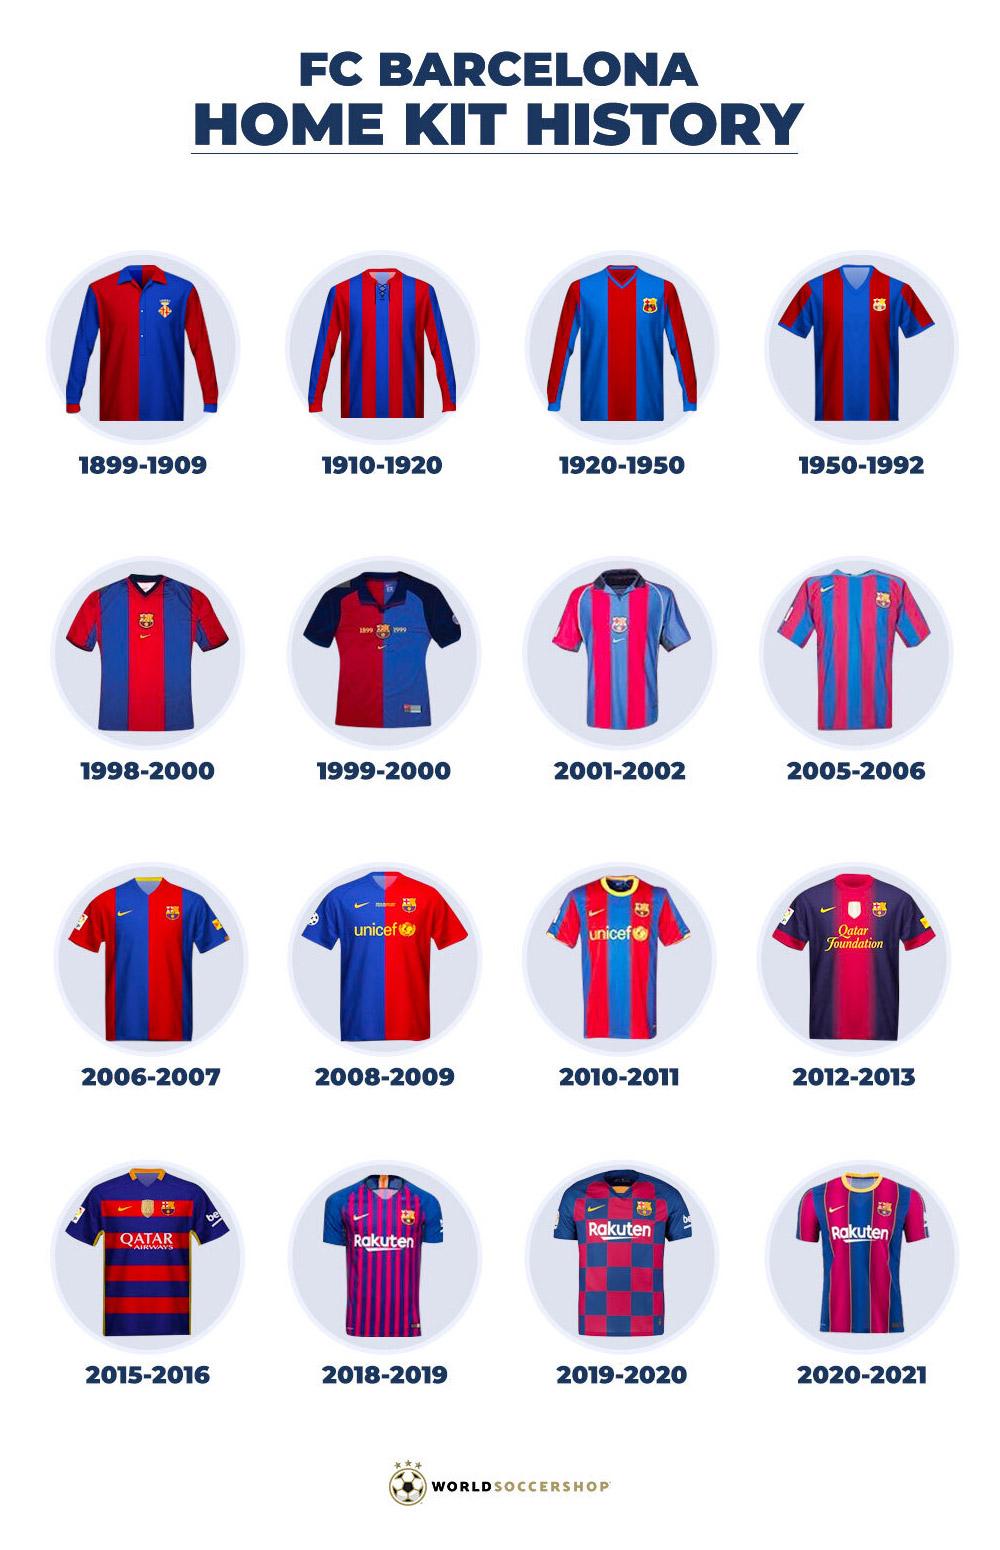 An abbreviated history of Barcelona Home Jerseys